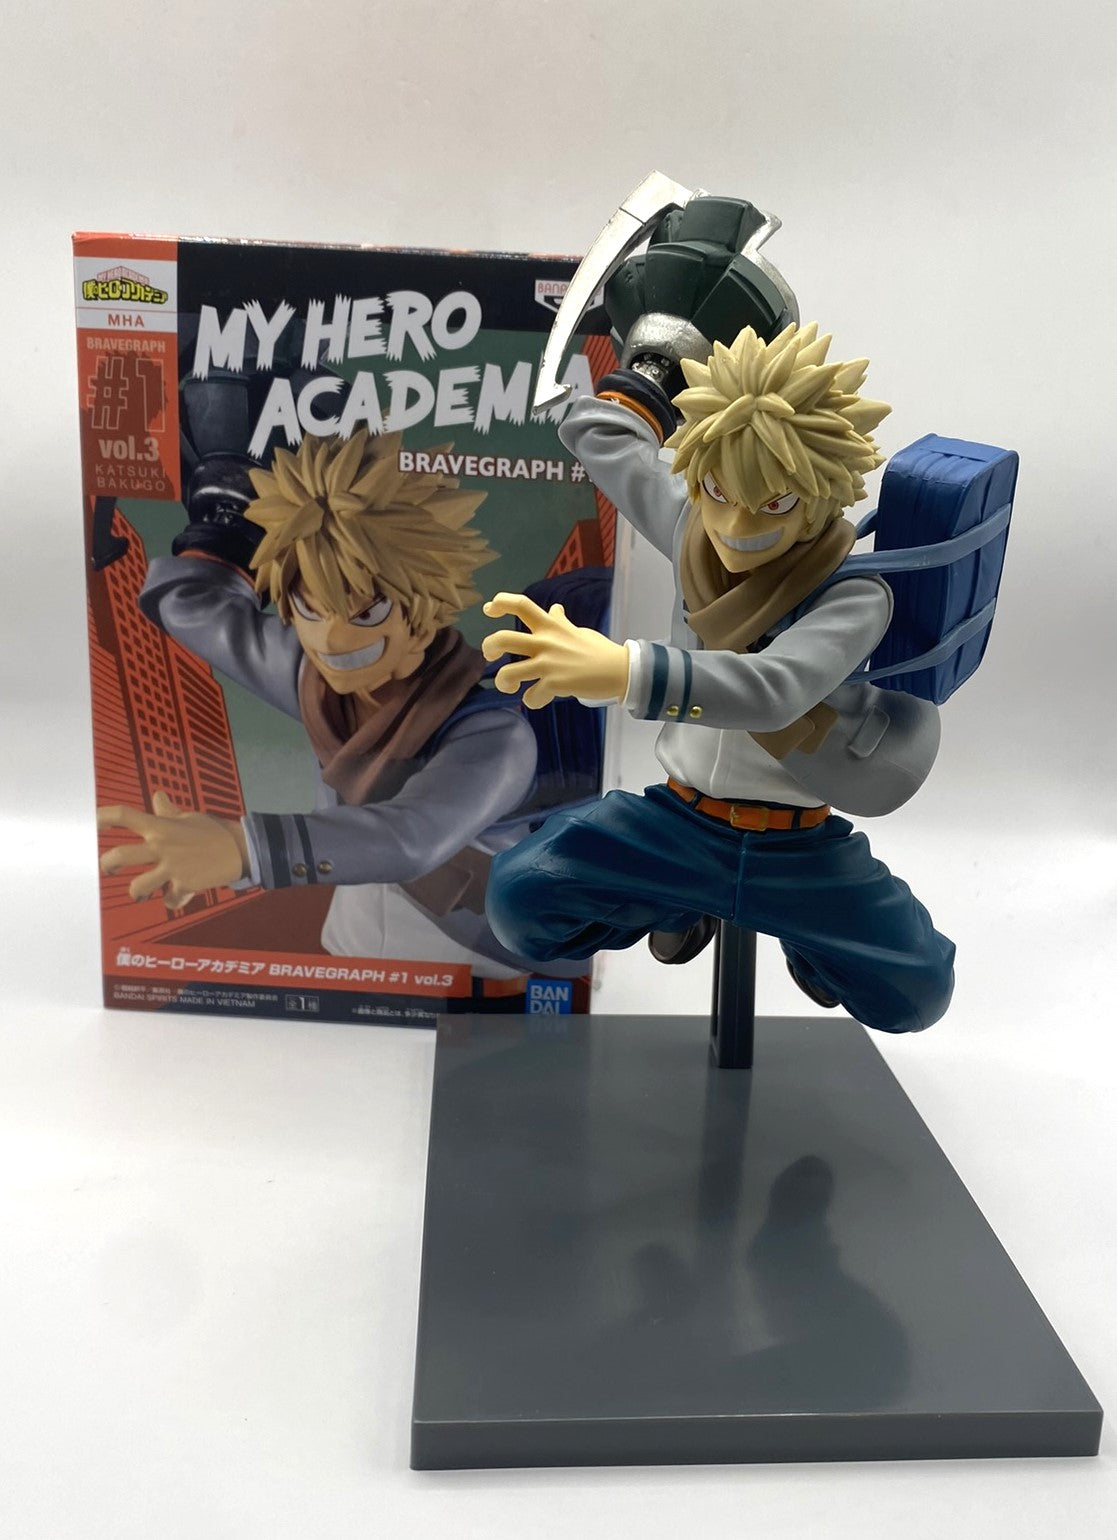 My Hero Academia Bravegraph #1 Vol.3 Figure / Figurine Bandai